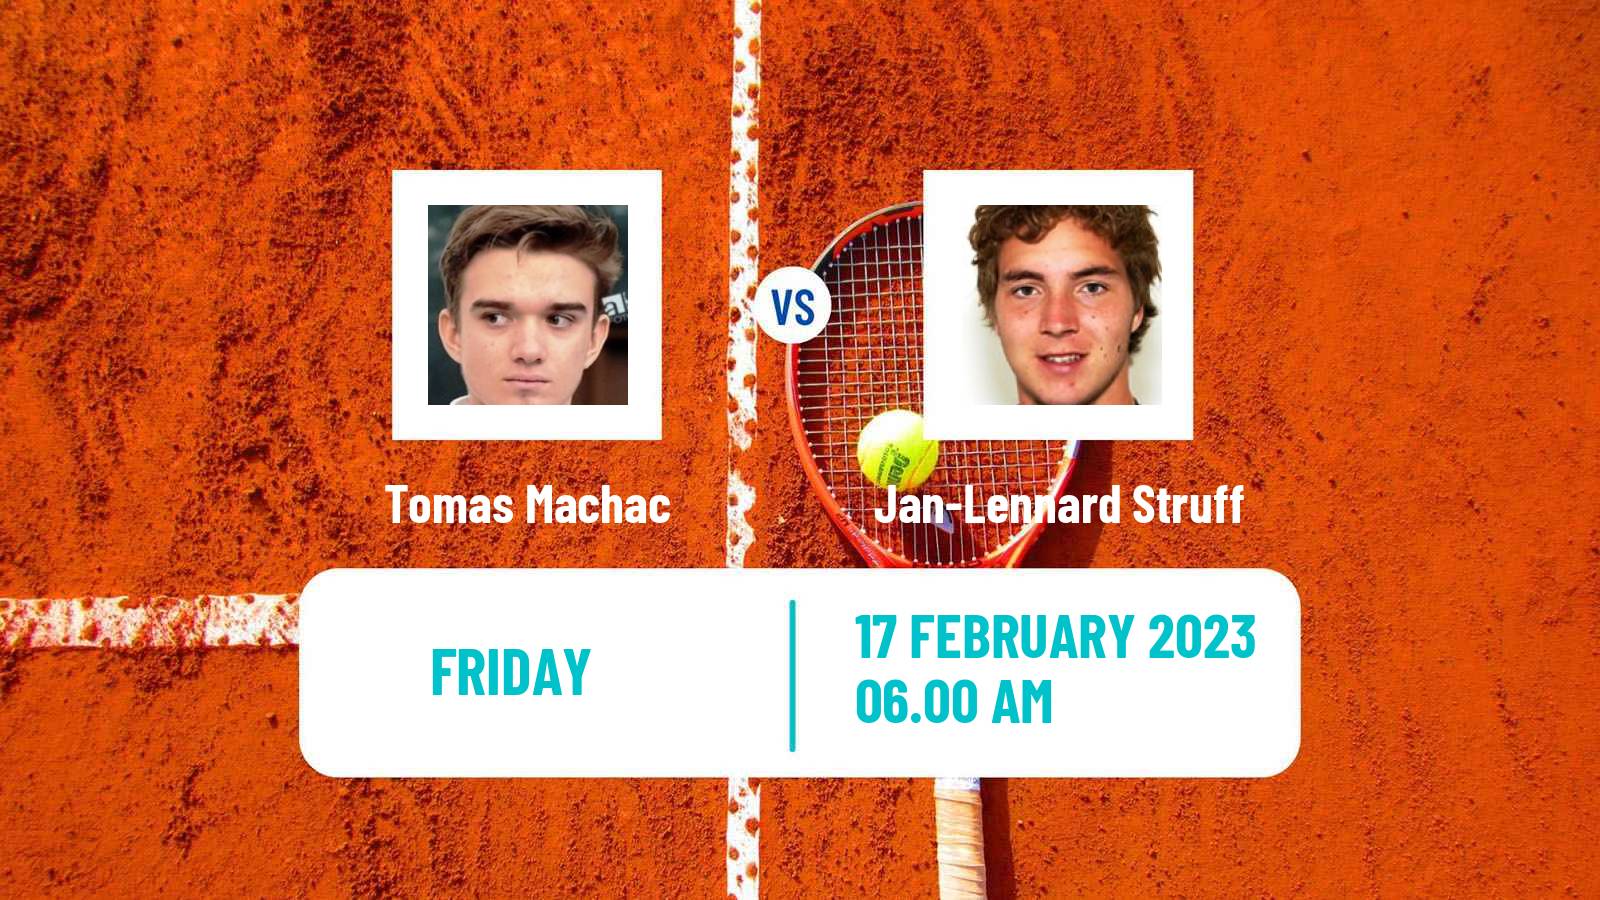 Tennis ATP Challenger Tomas Machac - Jan-Lennard Struff